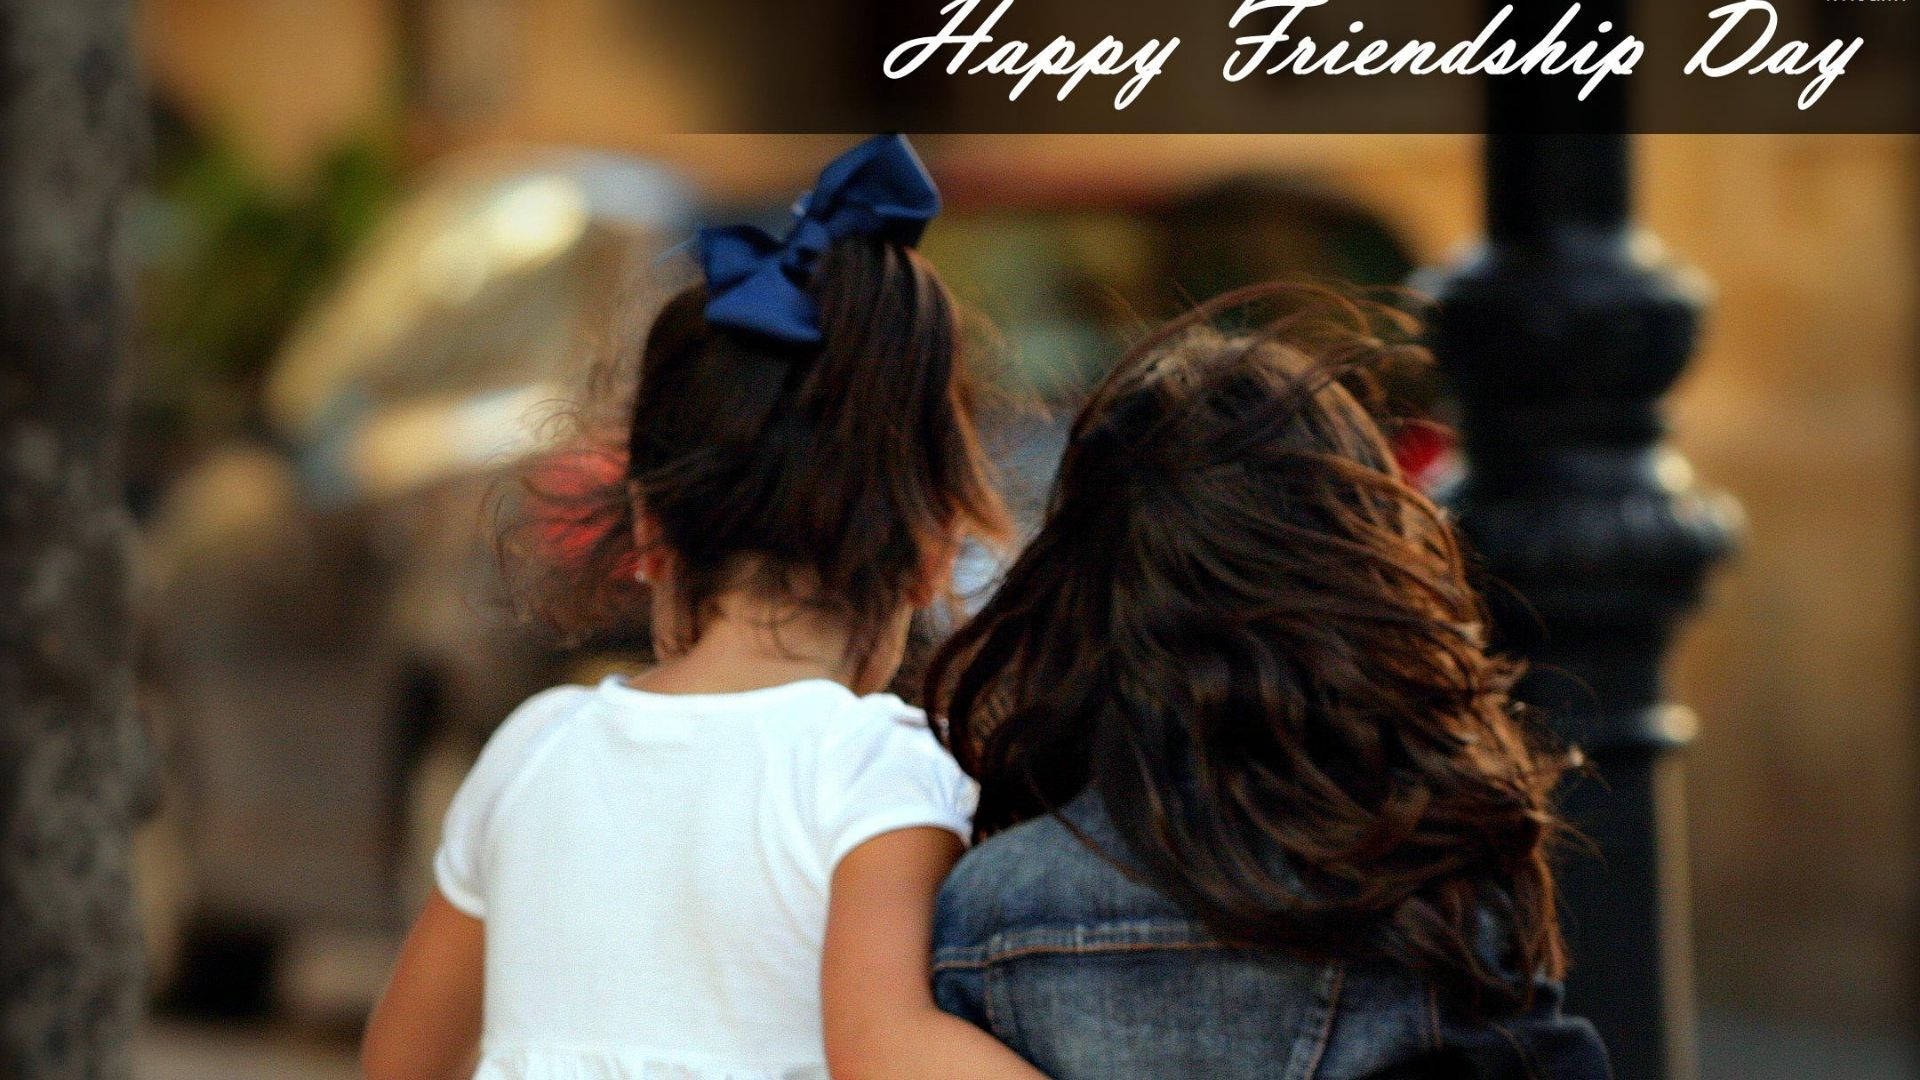 Girls Walking On Friendship Day